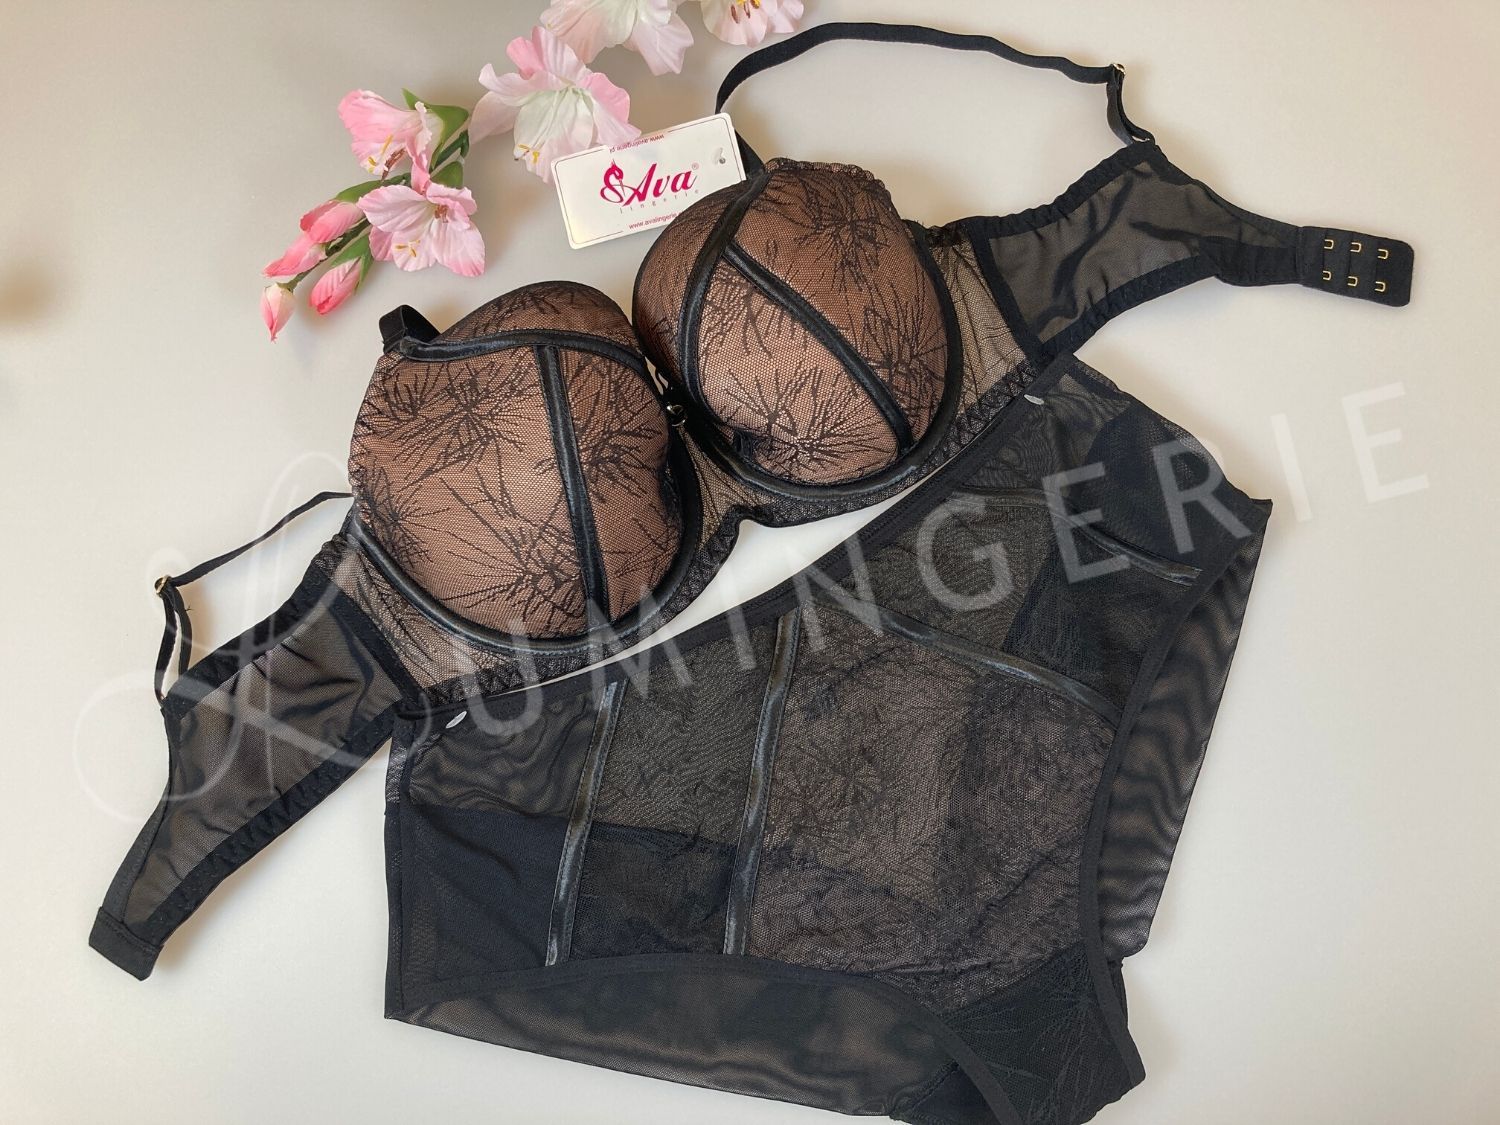 Ava Lingerie Serseia Brief Black  Lumingerie bras and underwear